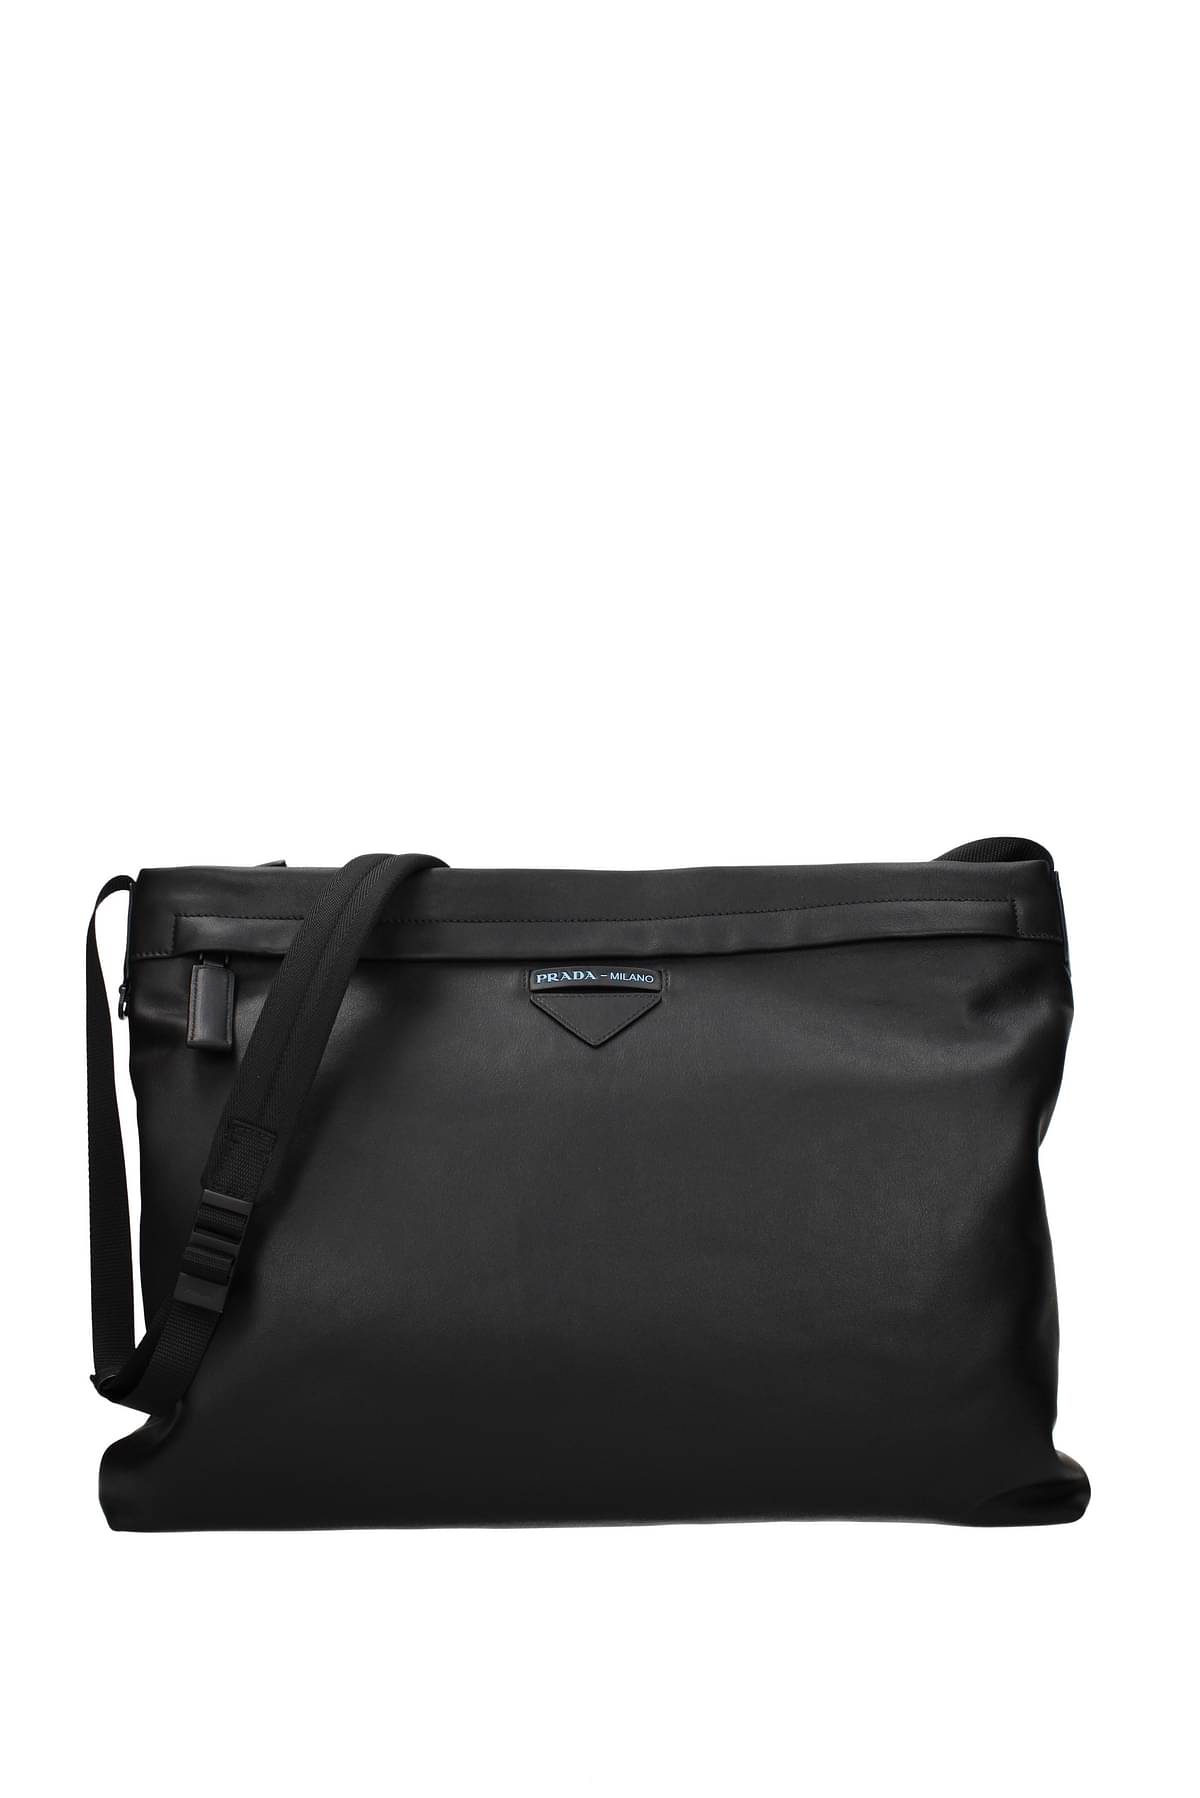 Prada Crossbody Bag Men 2VH057GRACELUXNERO Leather 875€